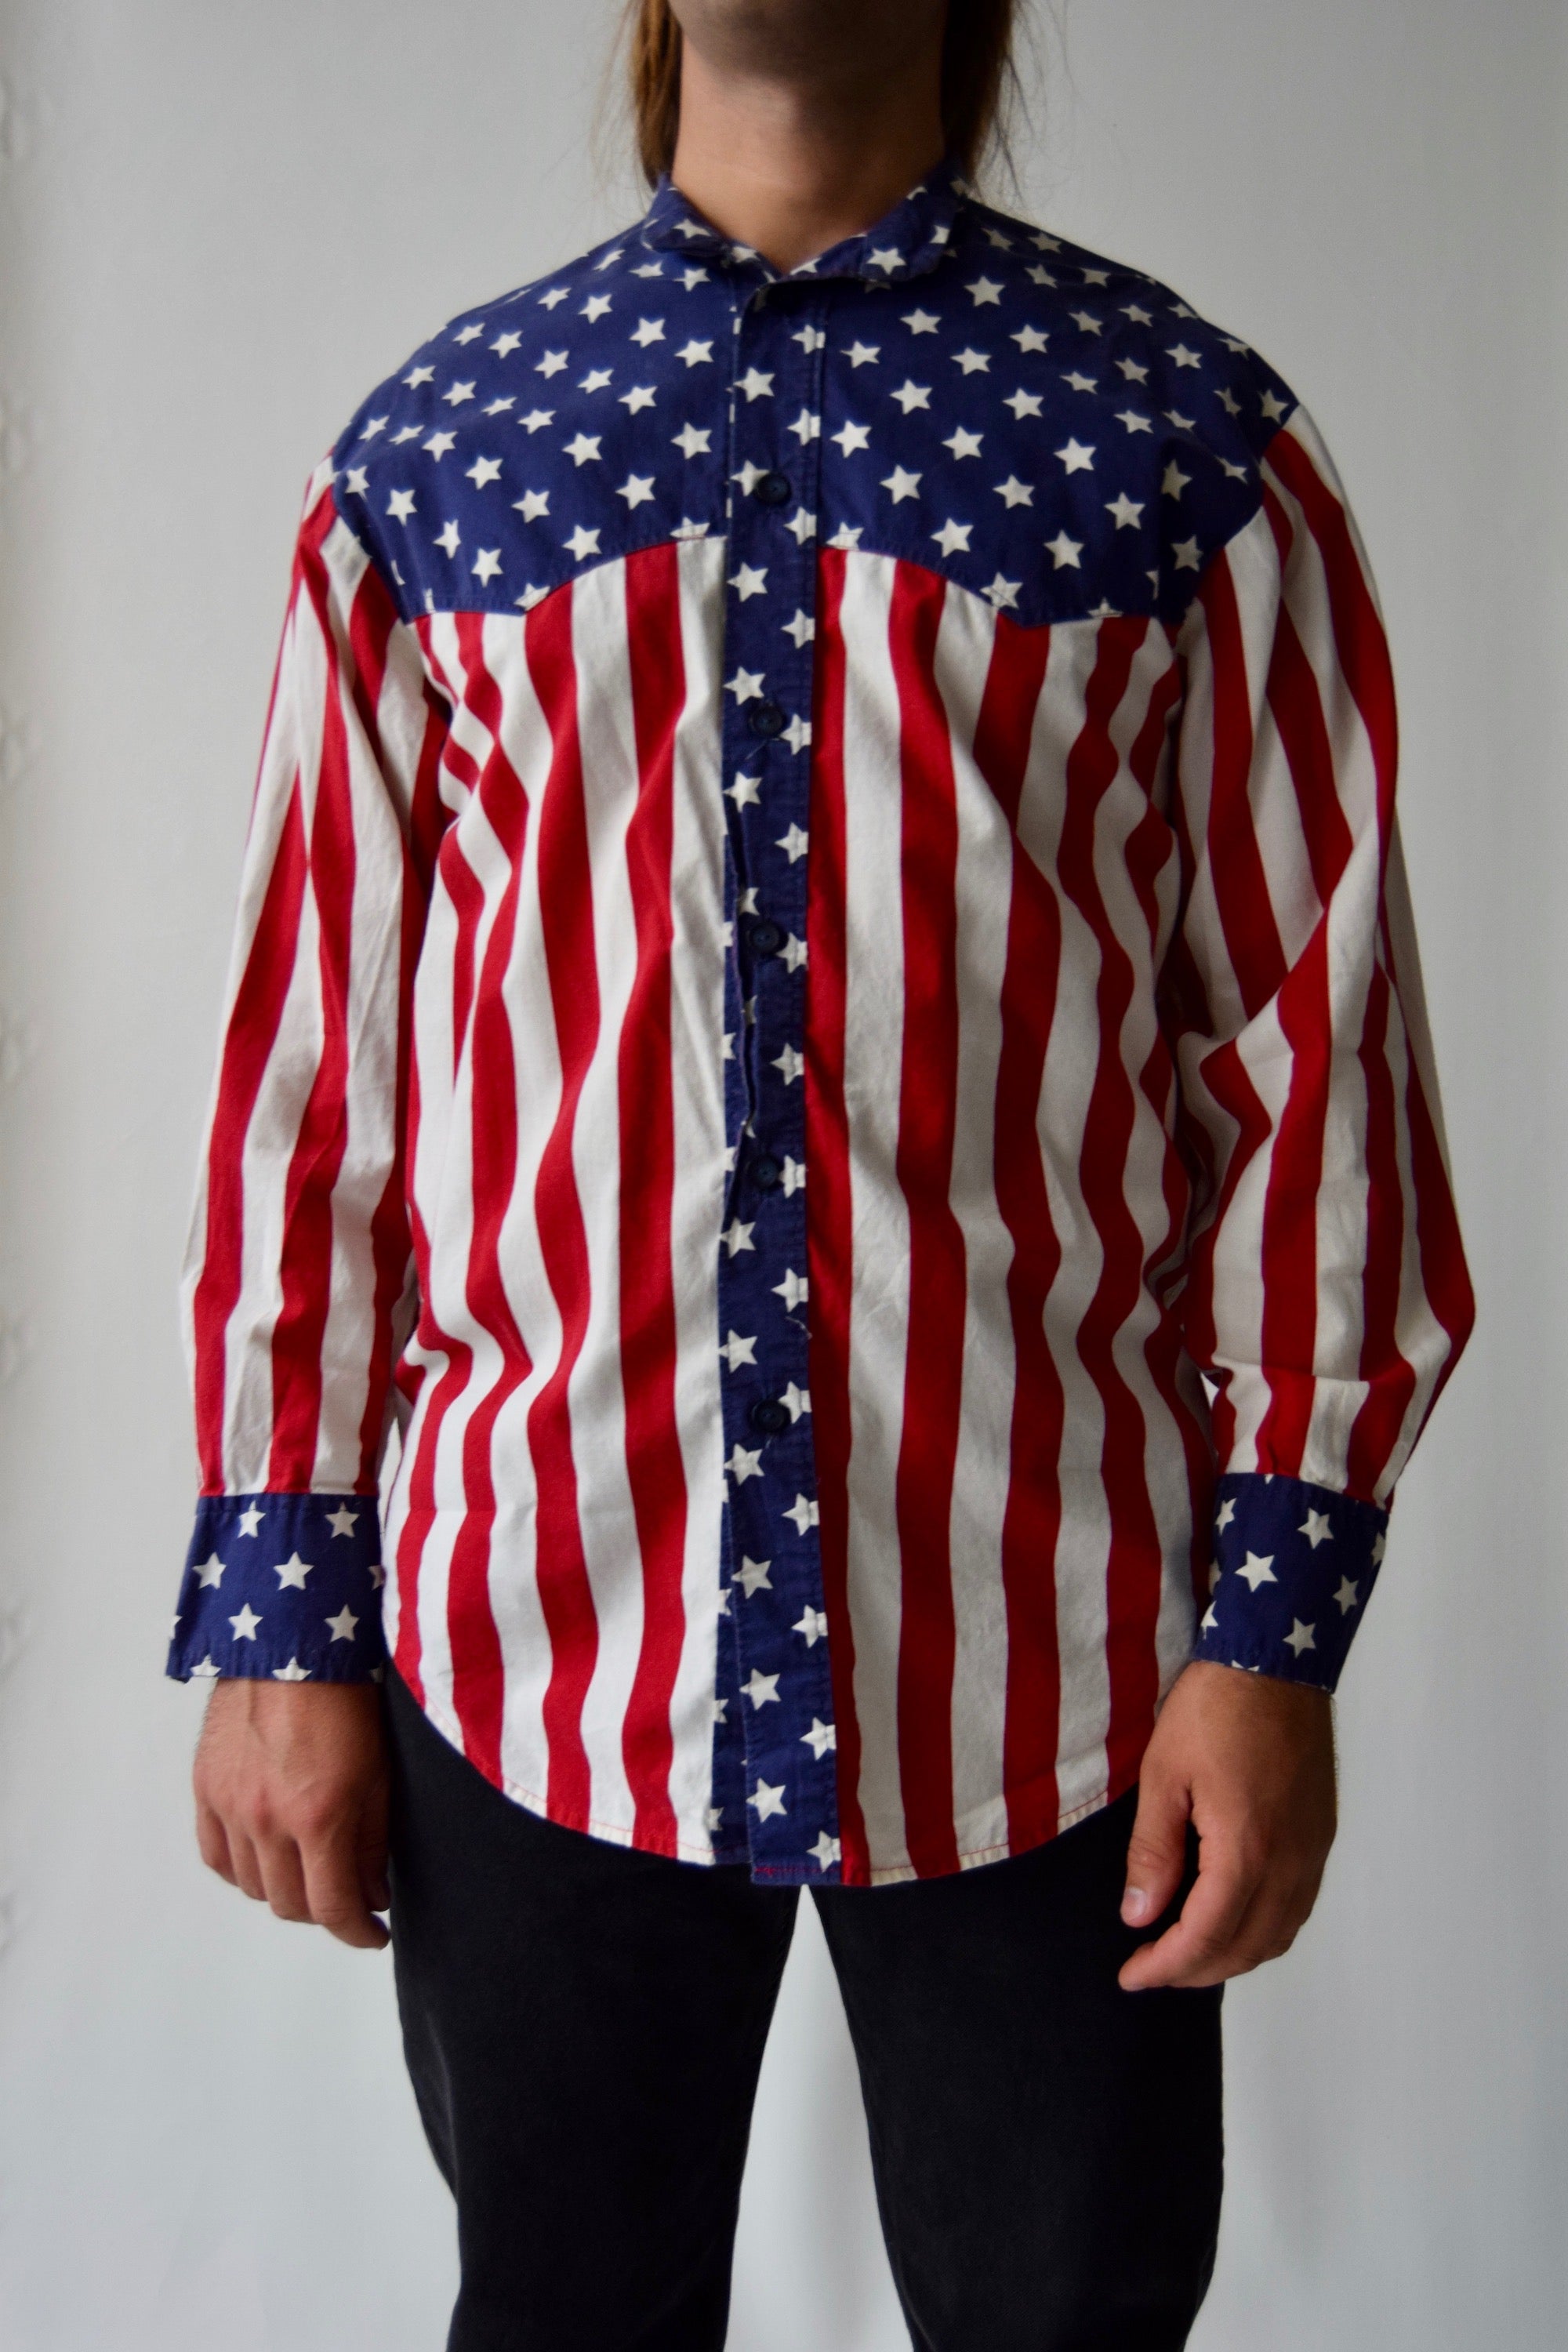 Vintage American Flag Men's Button Up